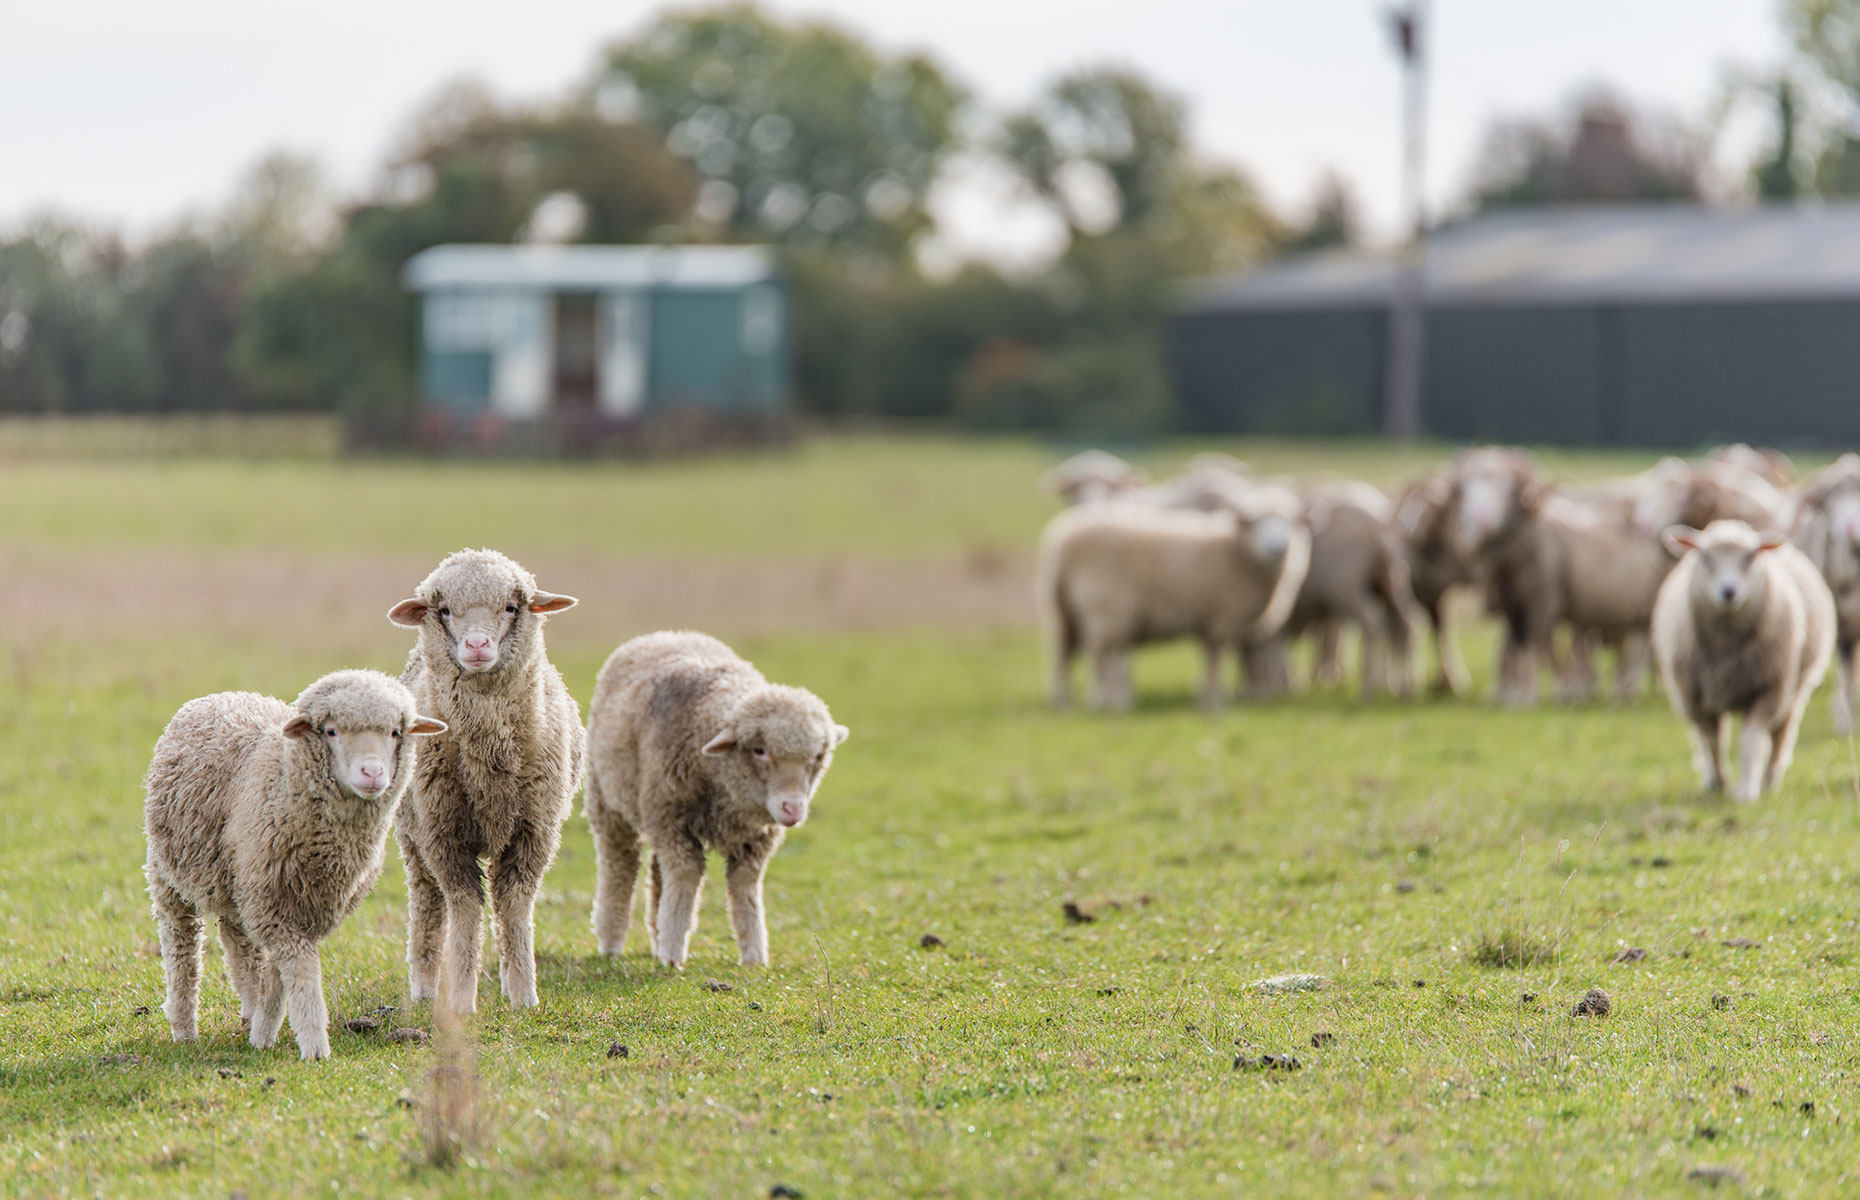 Sheep at Romney Marsh Shepherd's Huts (Image: Matilda Delves Photography)